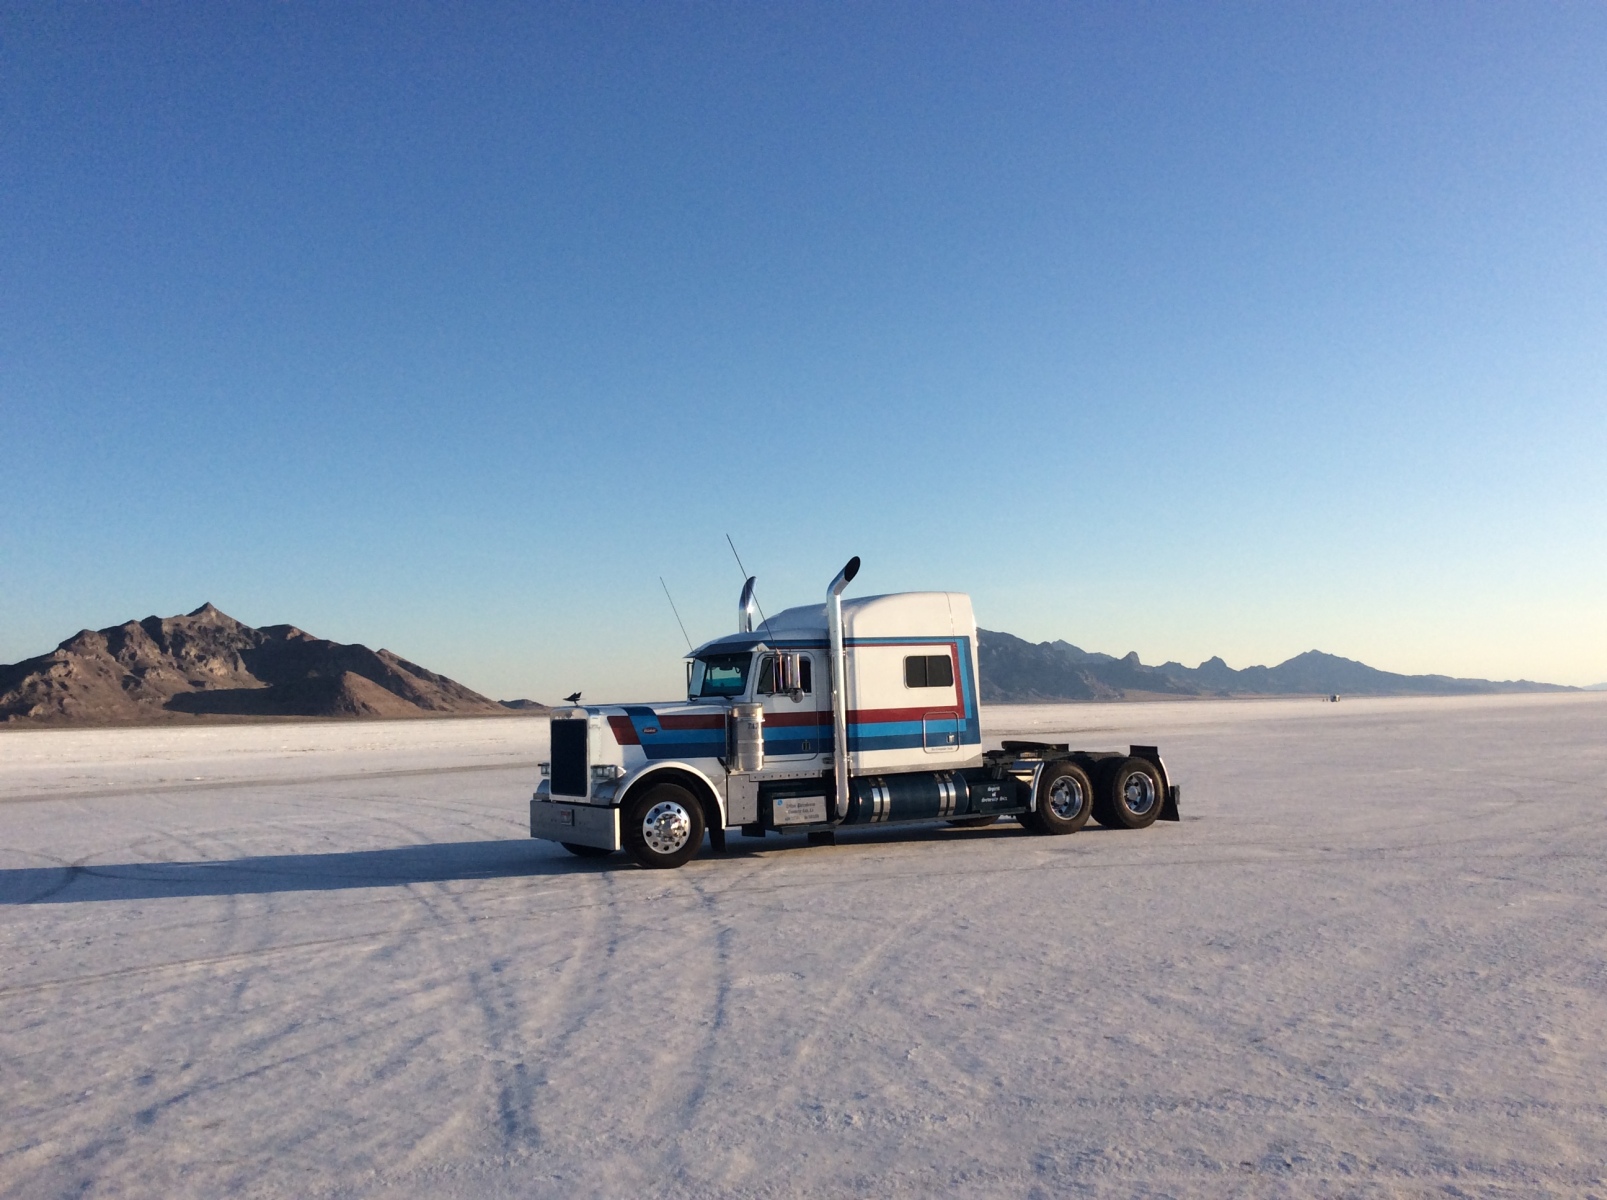 The Great Salt Lake Truck Show